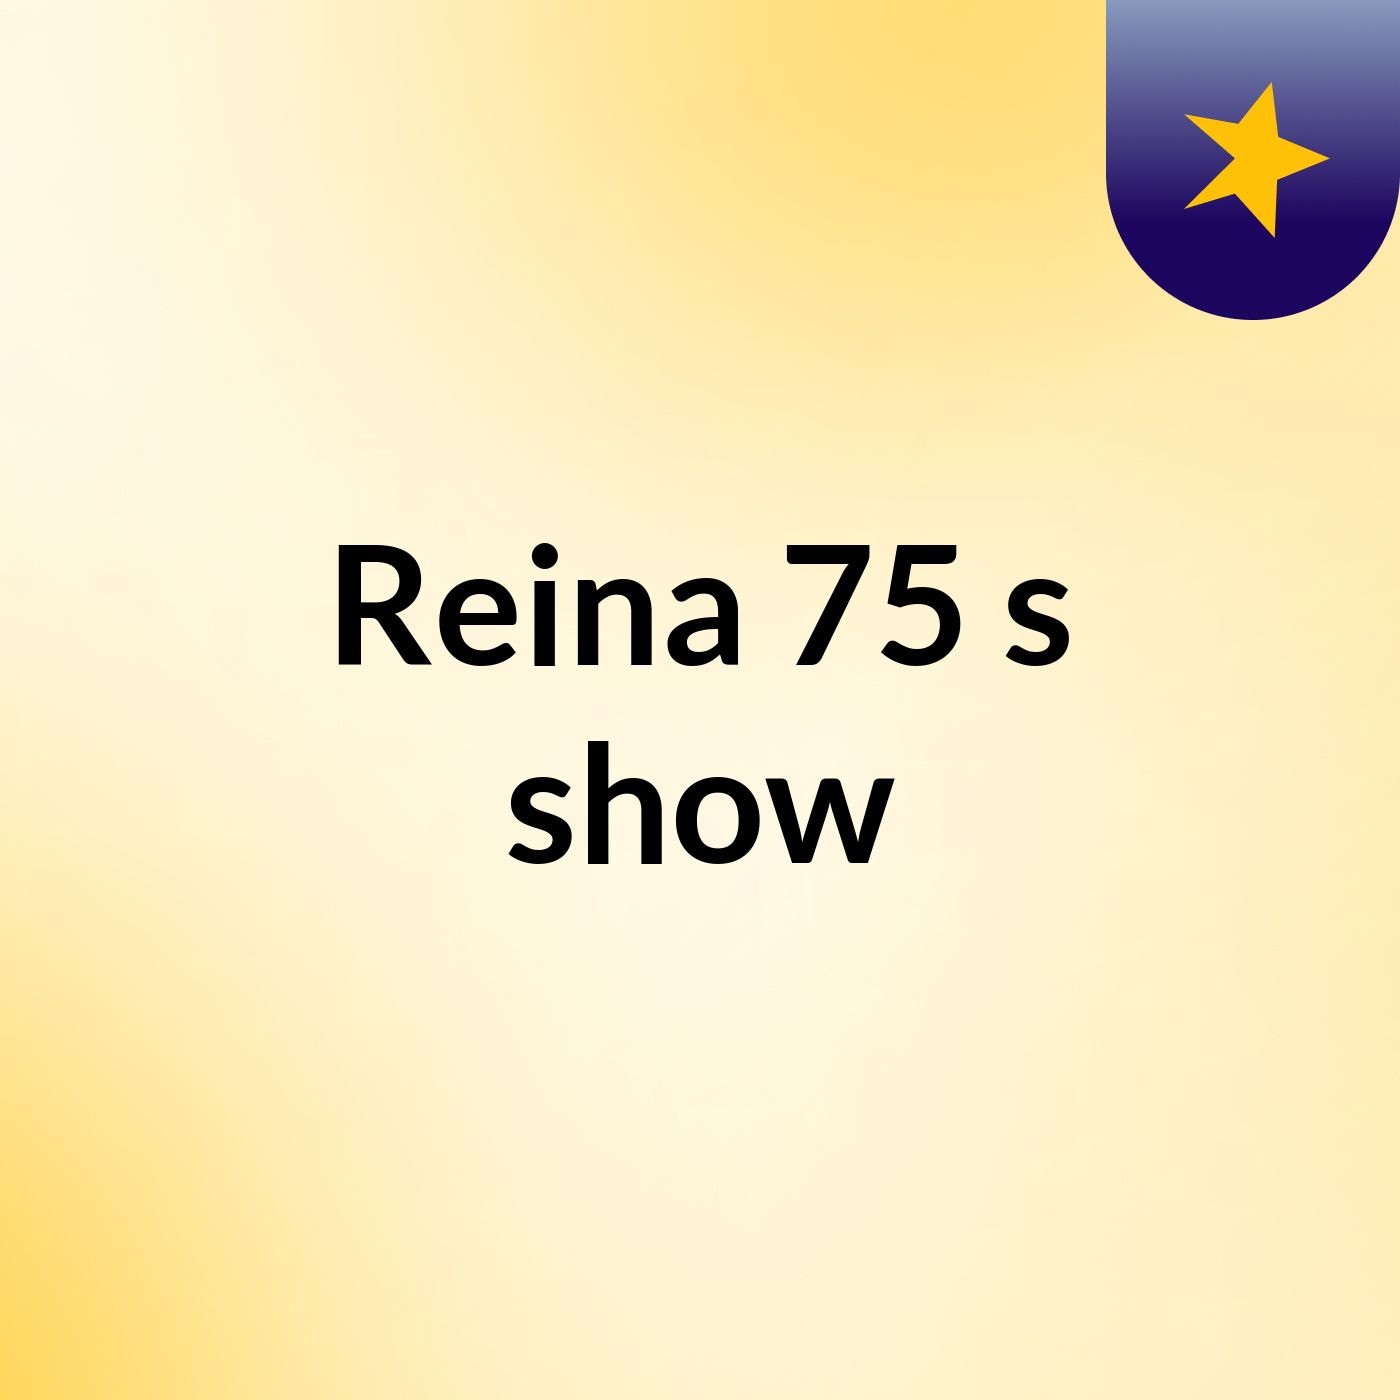 Reina 75's show